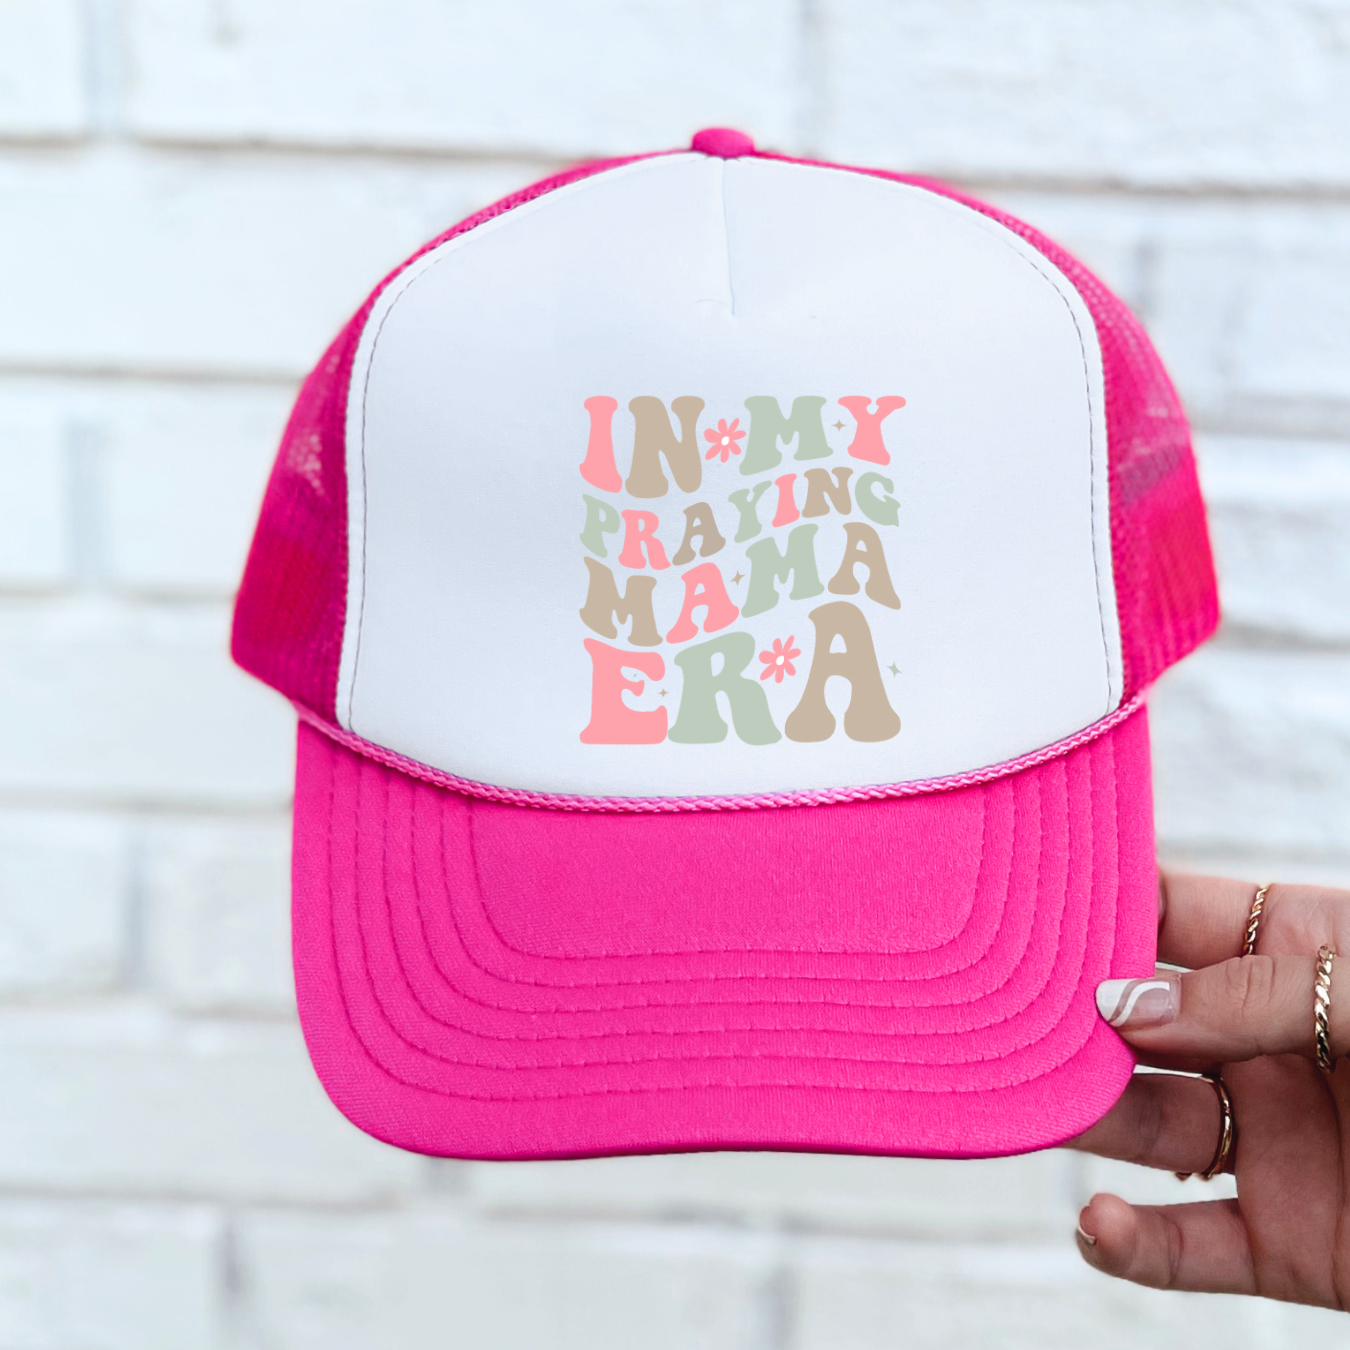 "In my Prayer Mama Era" trucker Hat